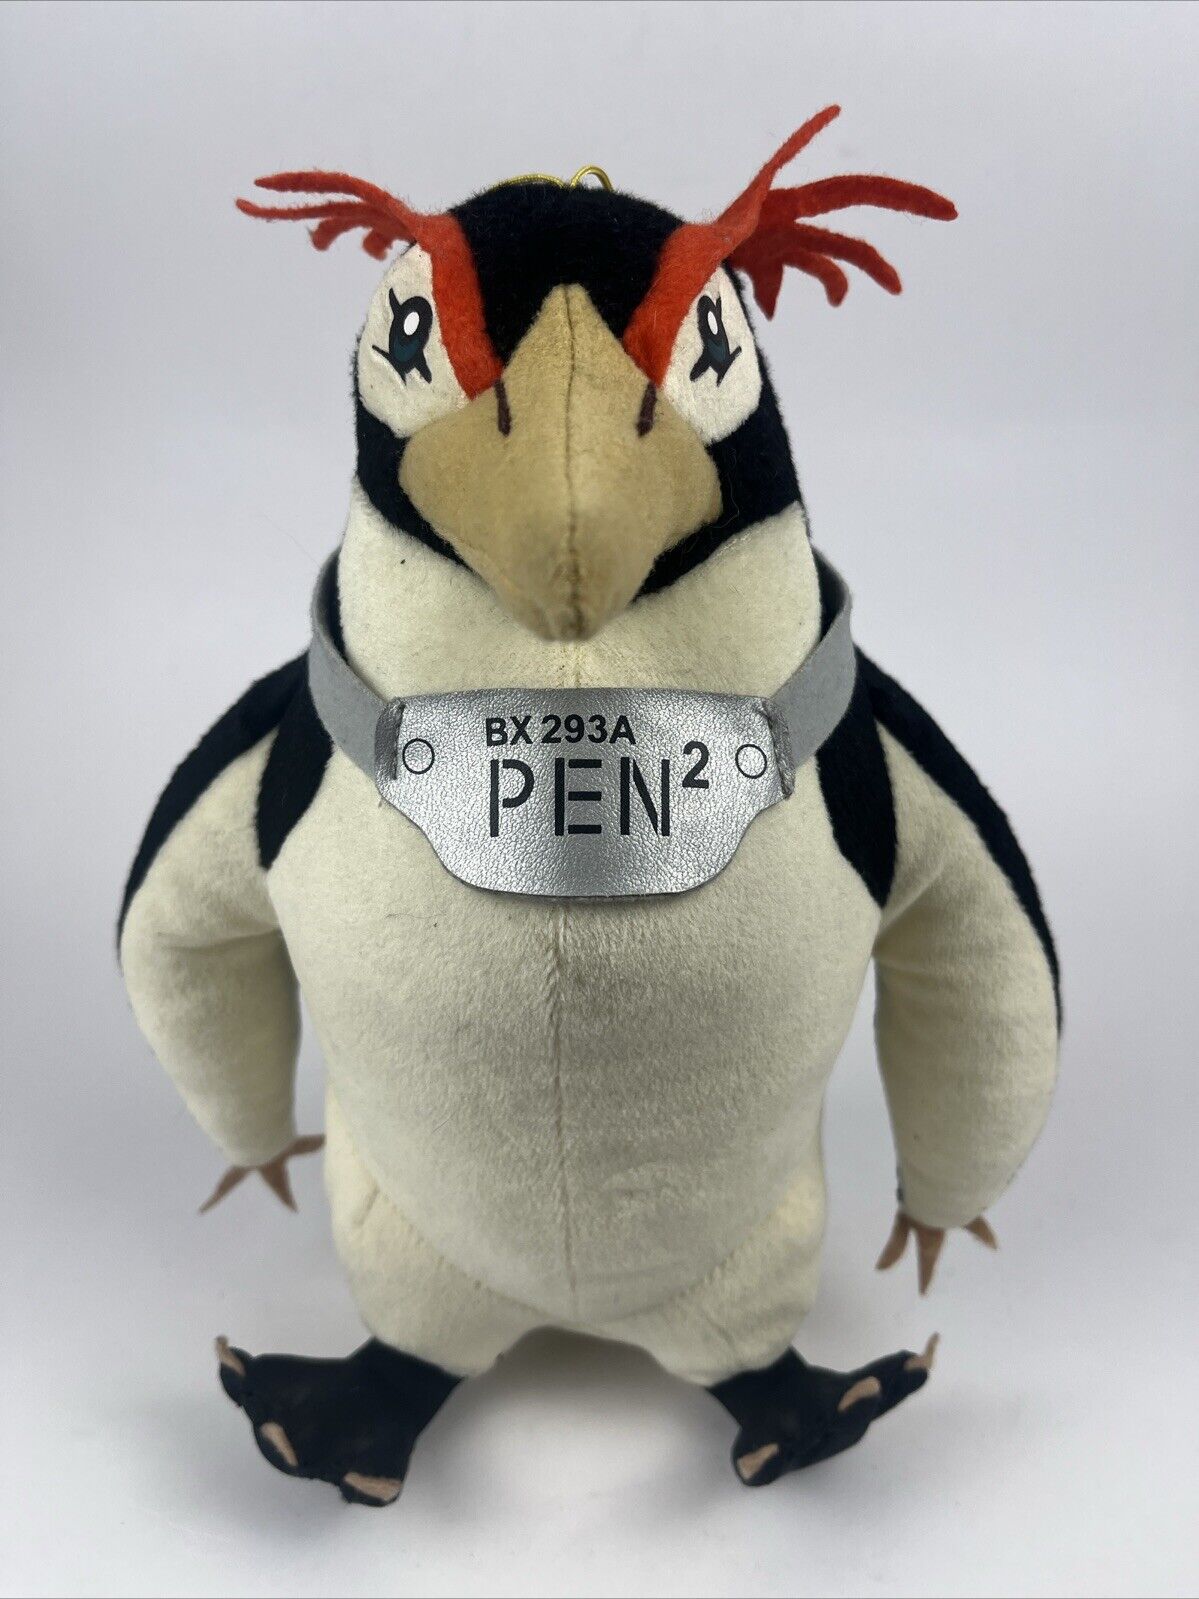 Neon Genesis Evangelion Pen Pen Plush Doll Stuffed Toy Rare Vintage